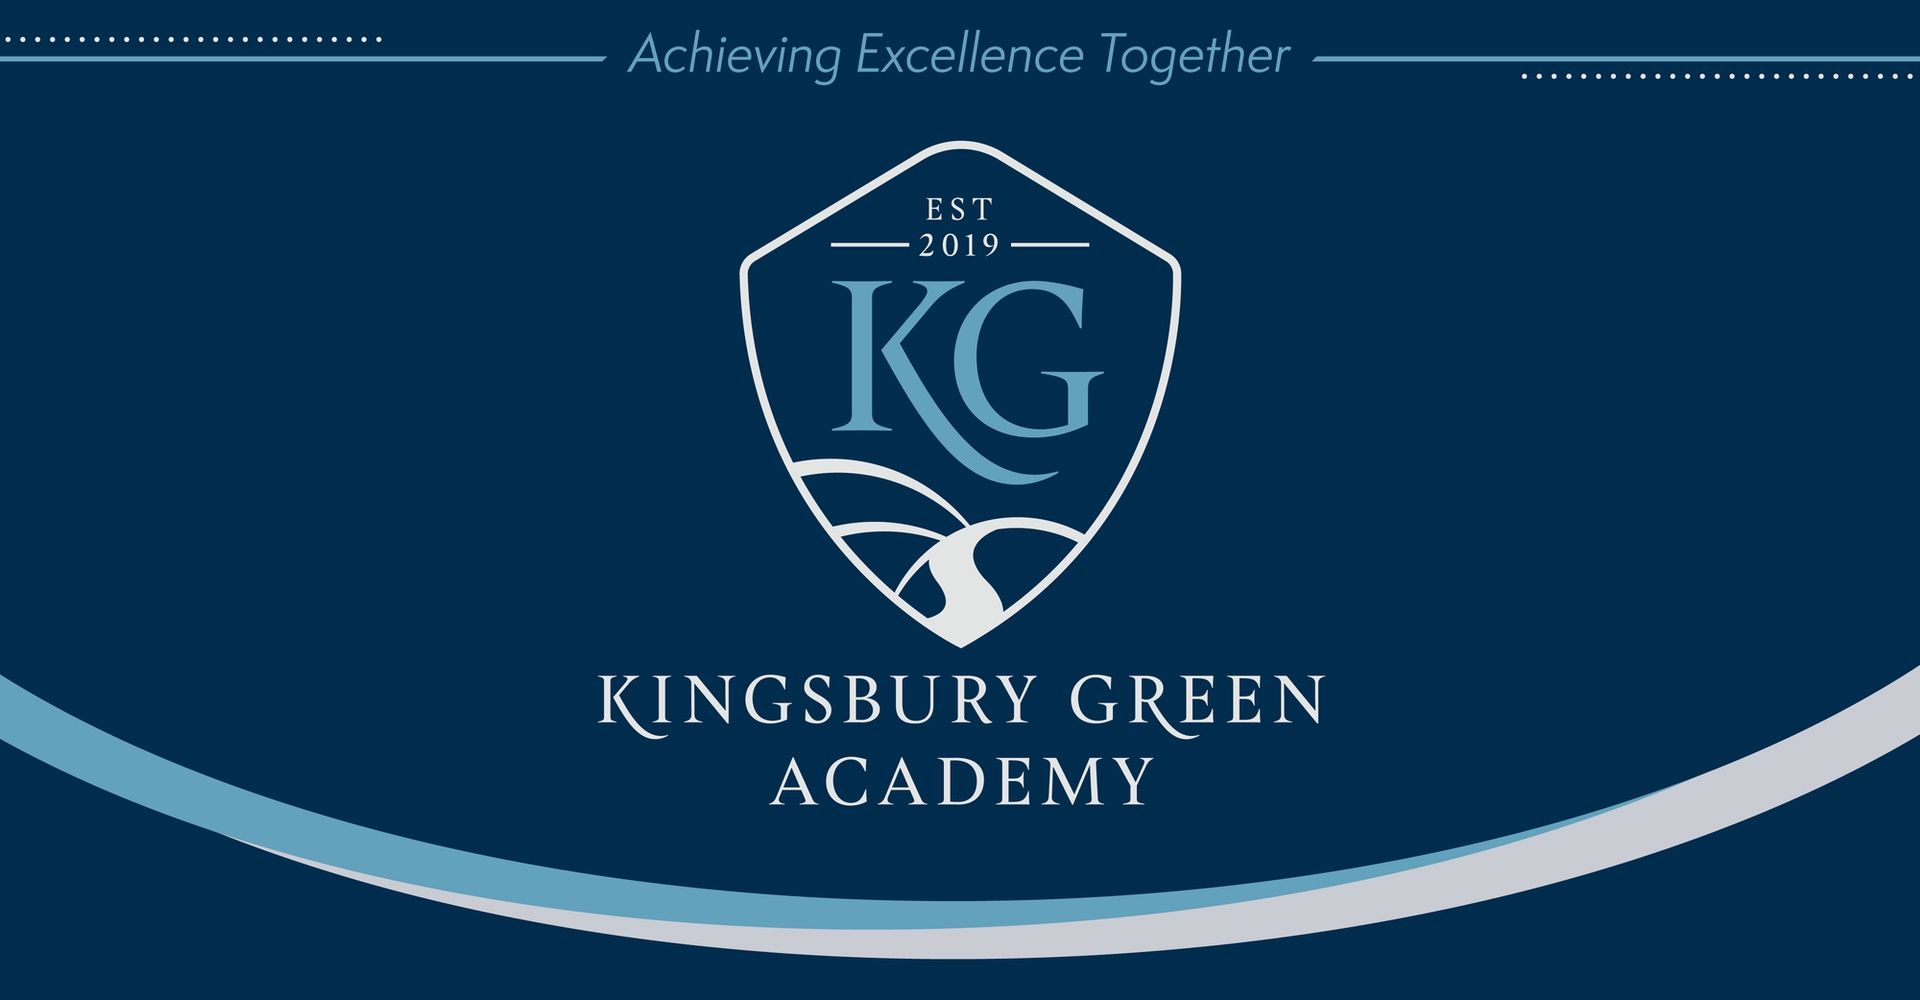 Kingsbury Green Academy logo on dark blue background.